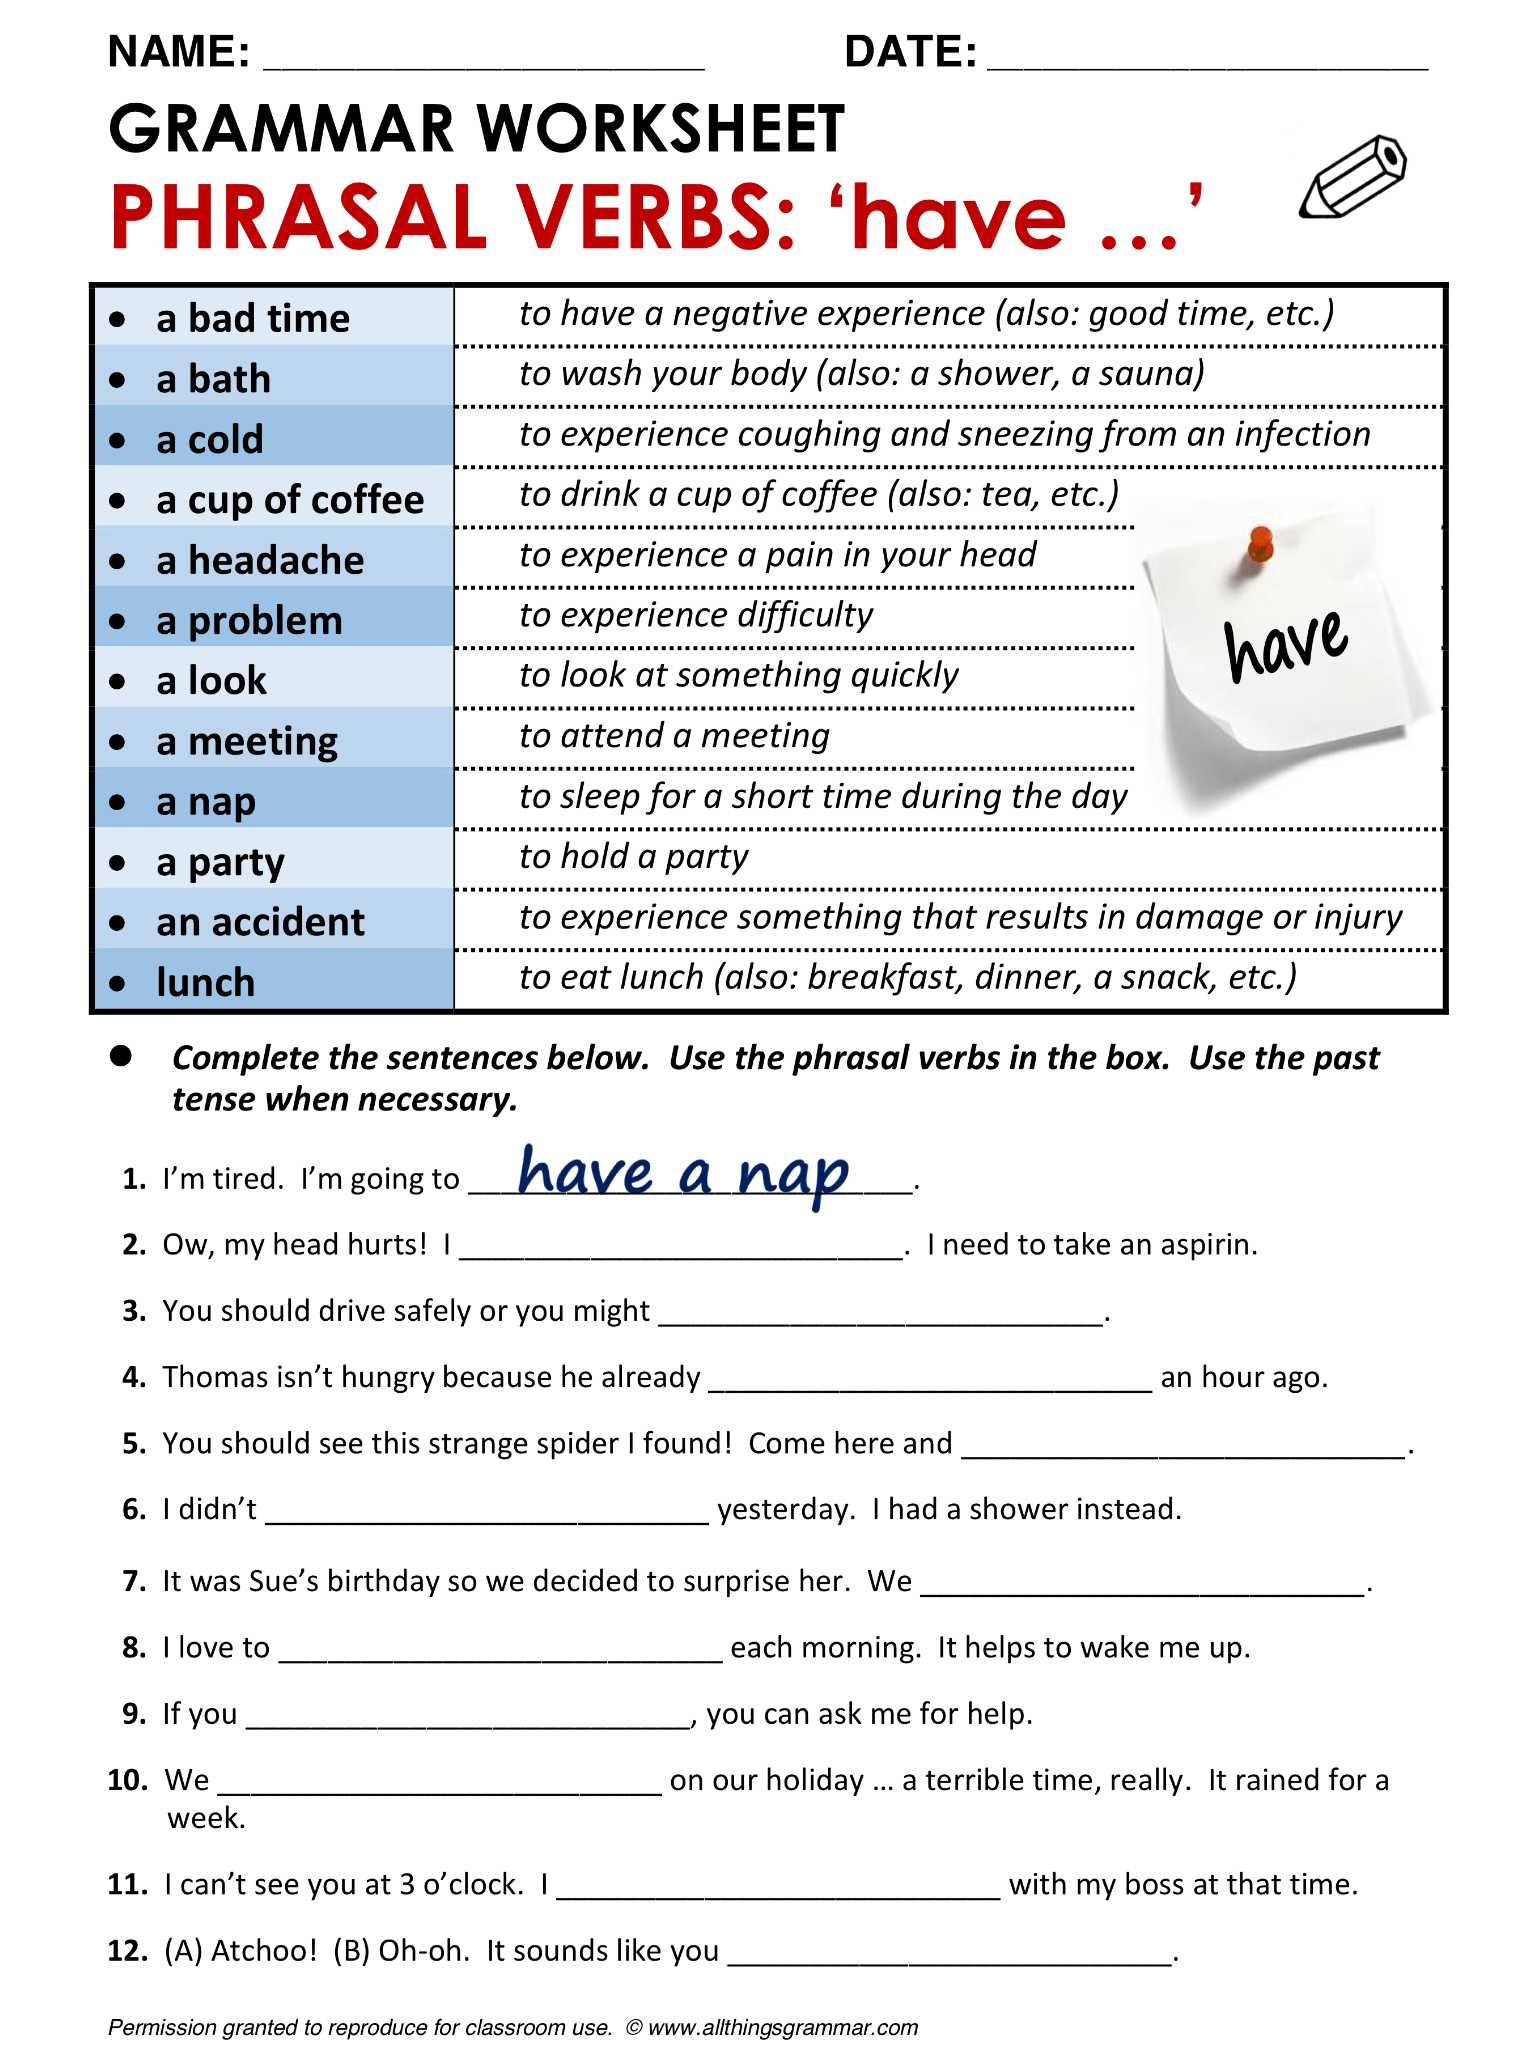 Grammar Punctuation Worksheets Along with Basic English Worksheets Elegant Free Pdf English Grammar Worksheets